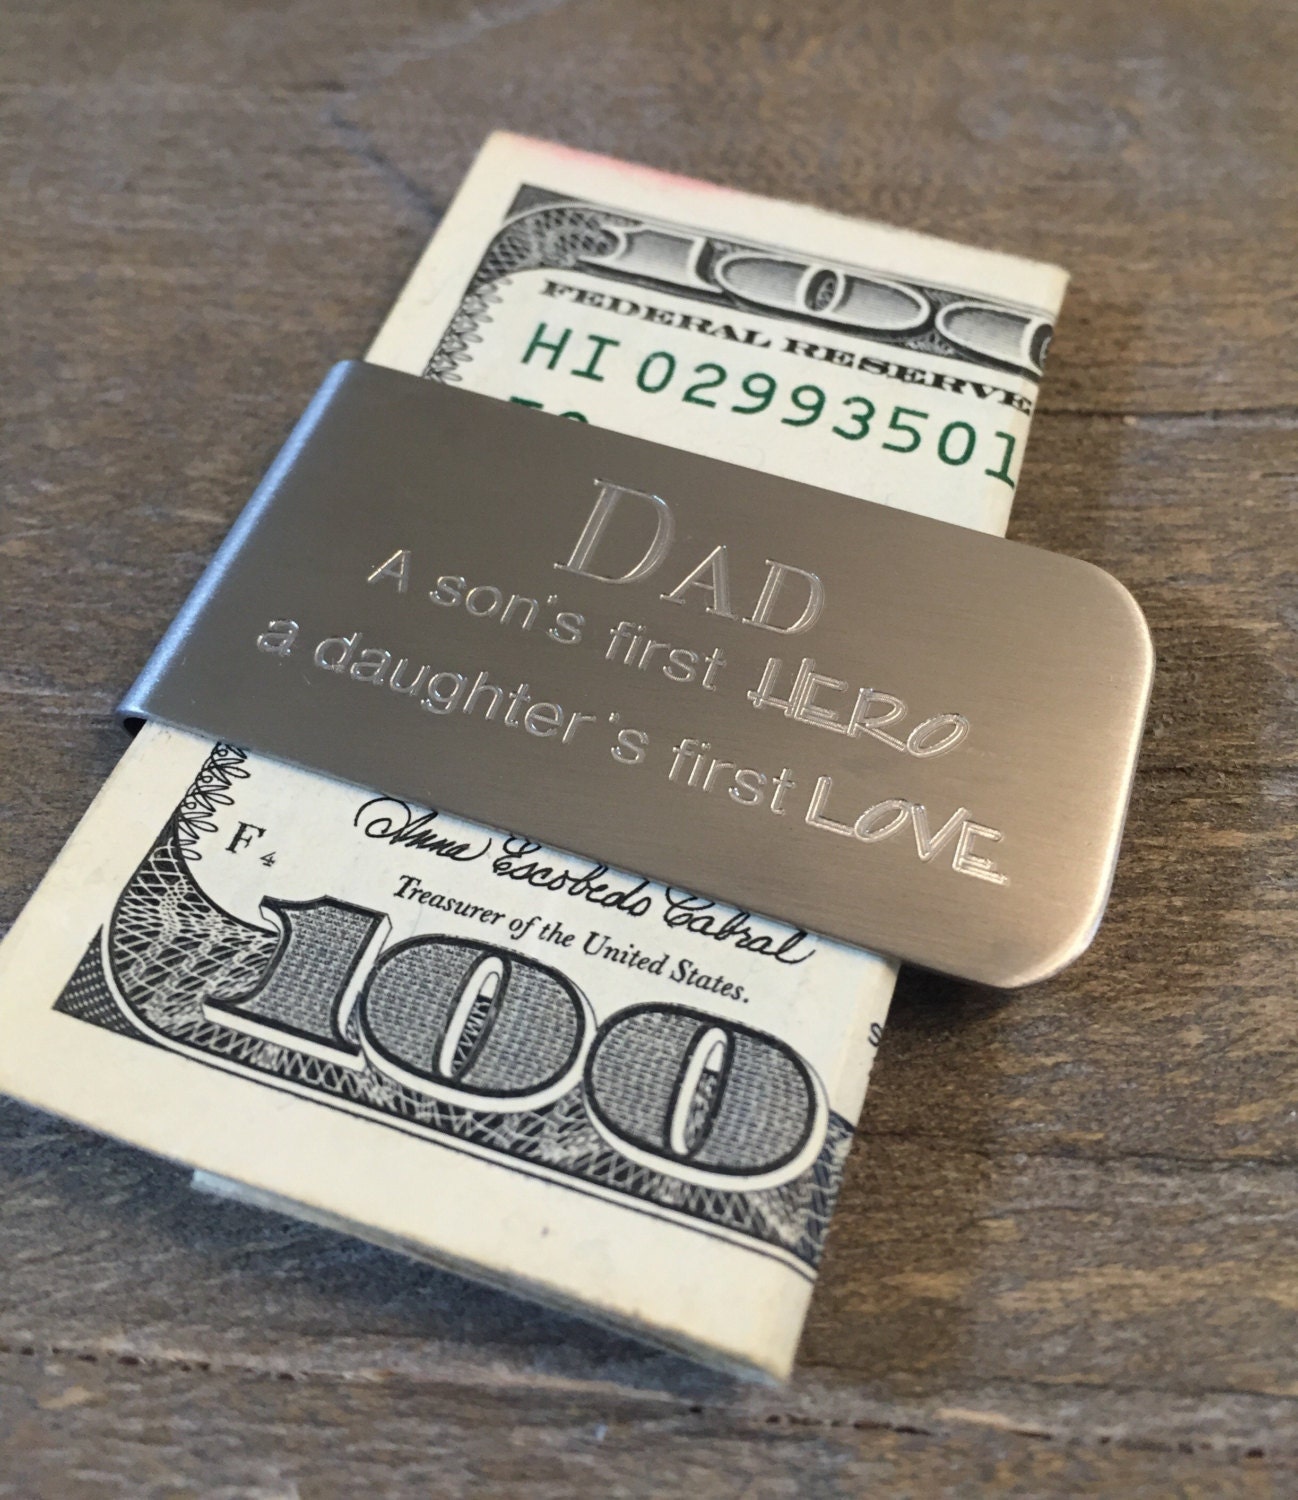 engraved money clip wallet